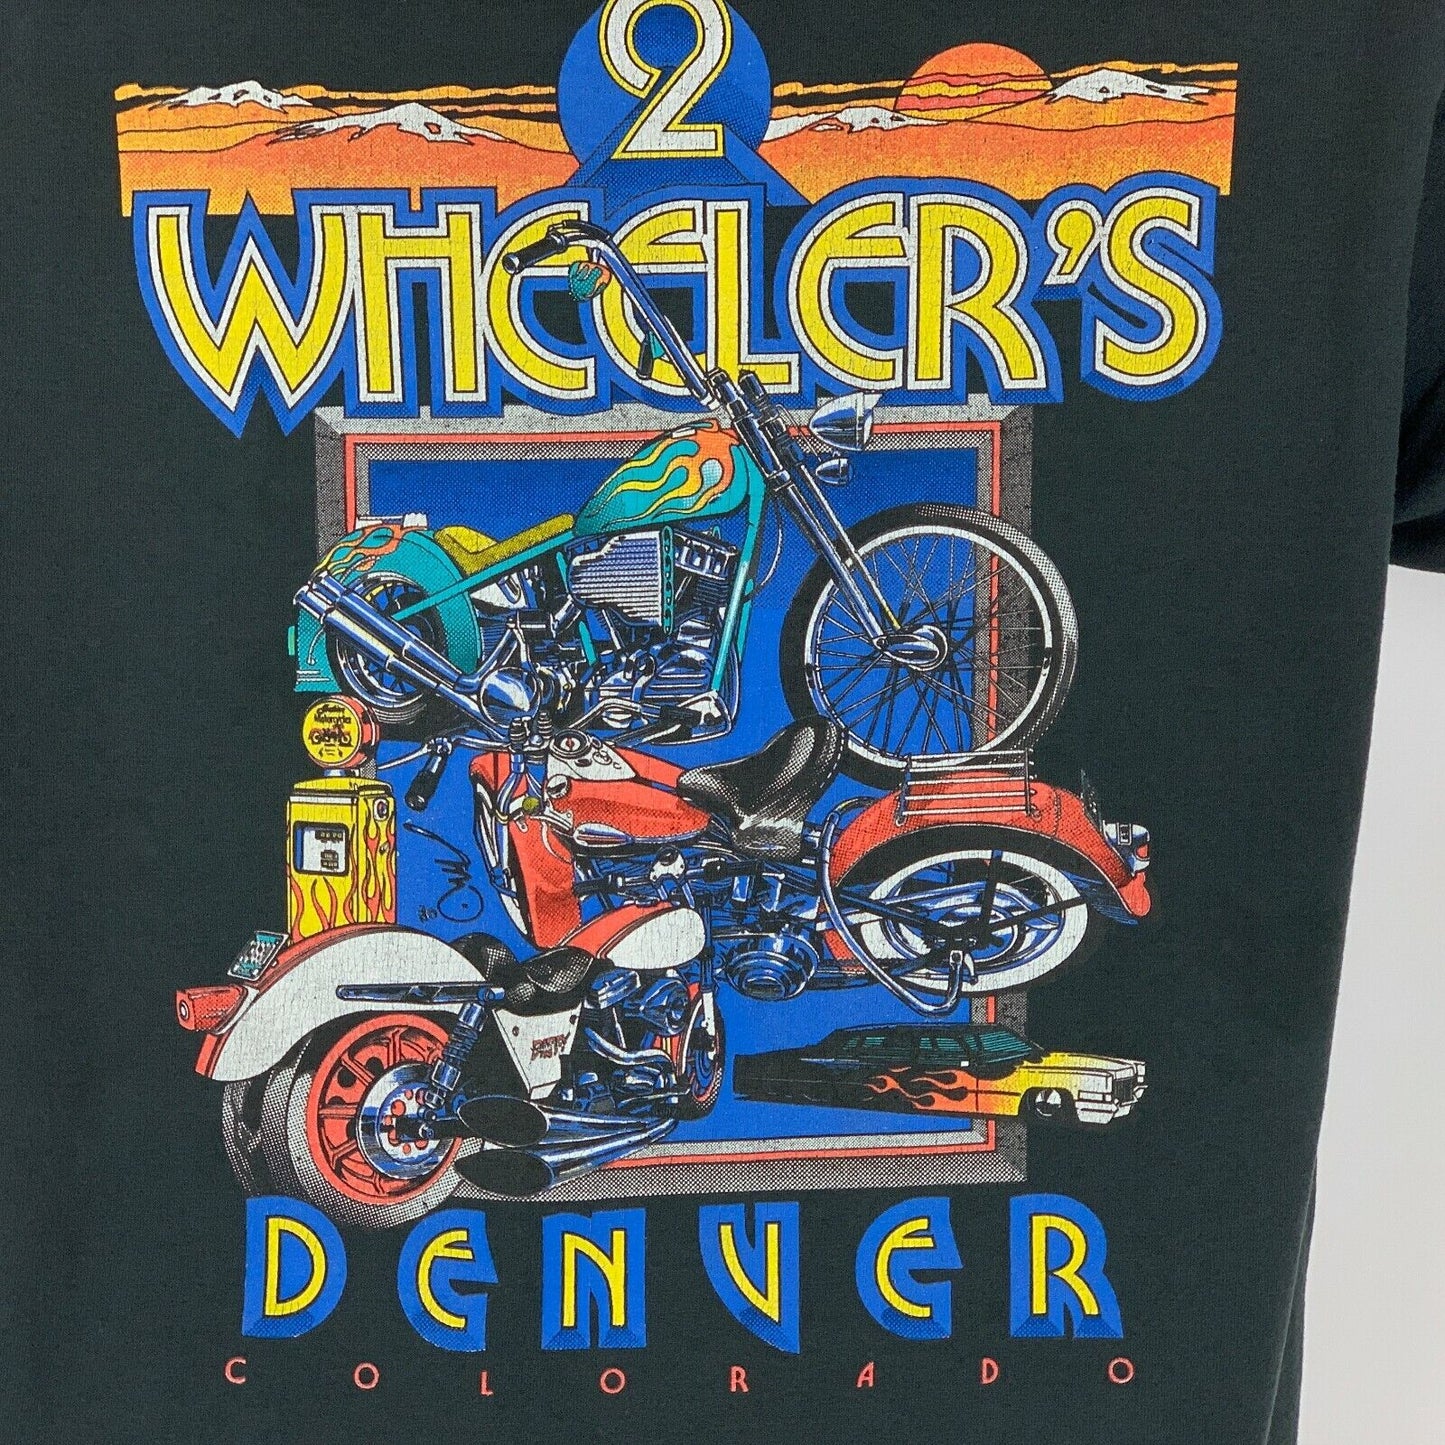 1993 Sturgis President Clinton Pope Vintage 90s T Shirt Motorcycle Biker Medium